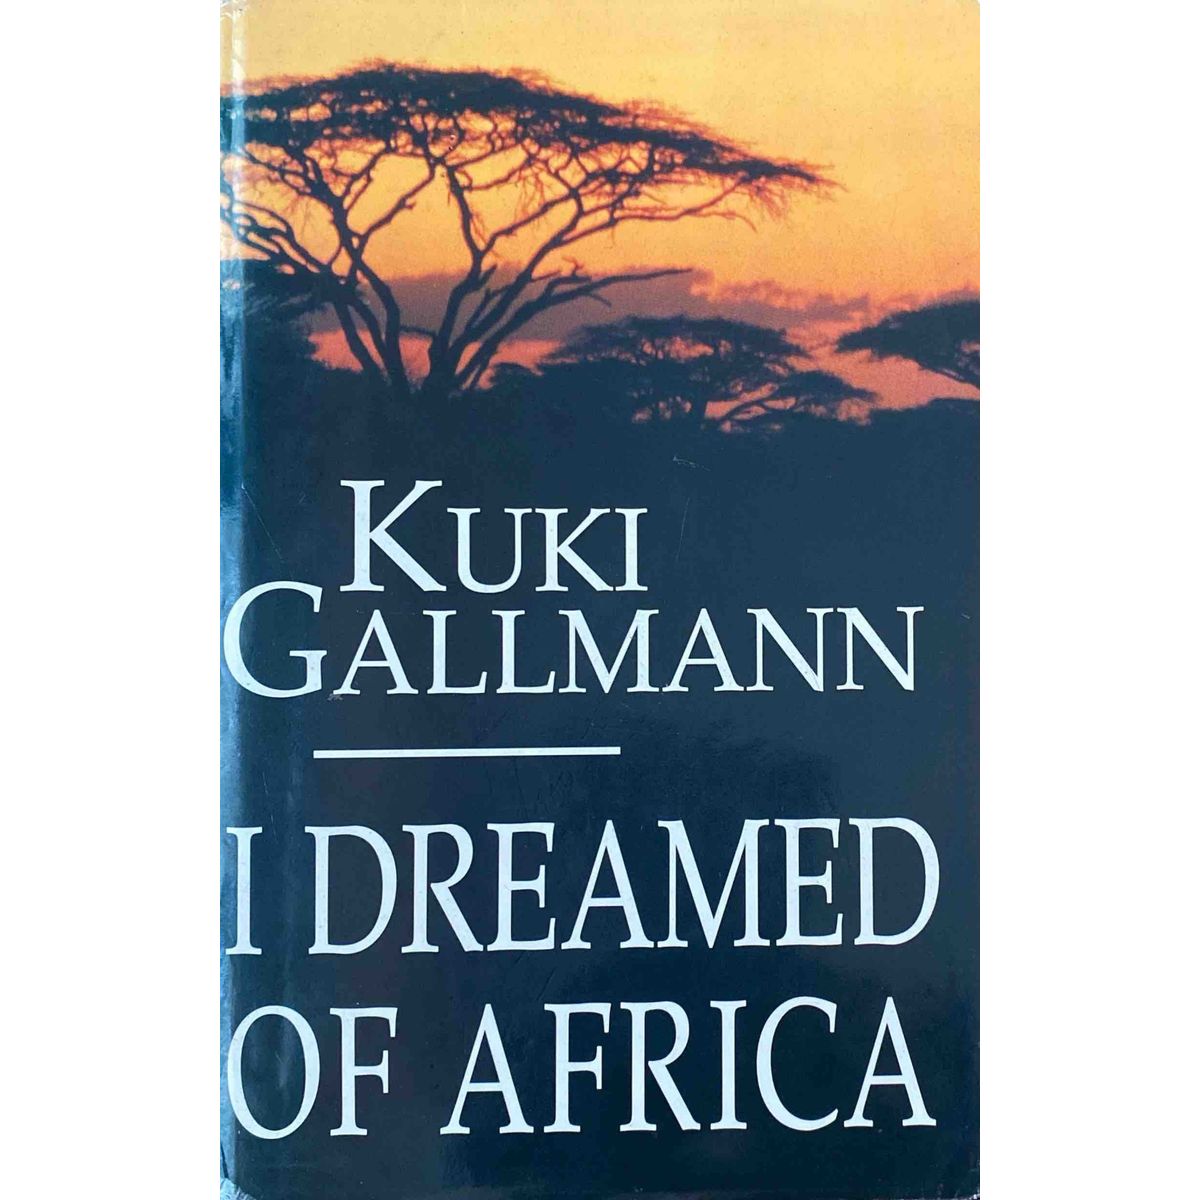 ISBN: 9780670836123 / 0670836125 - I Dreamed of Africa by Kuki Gallmann [1991]